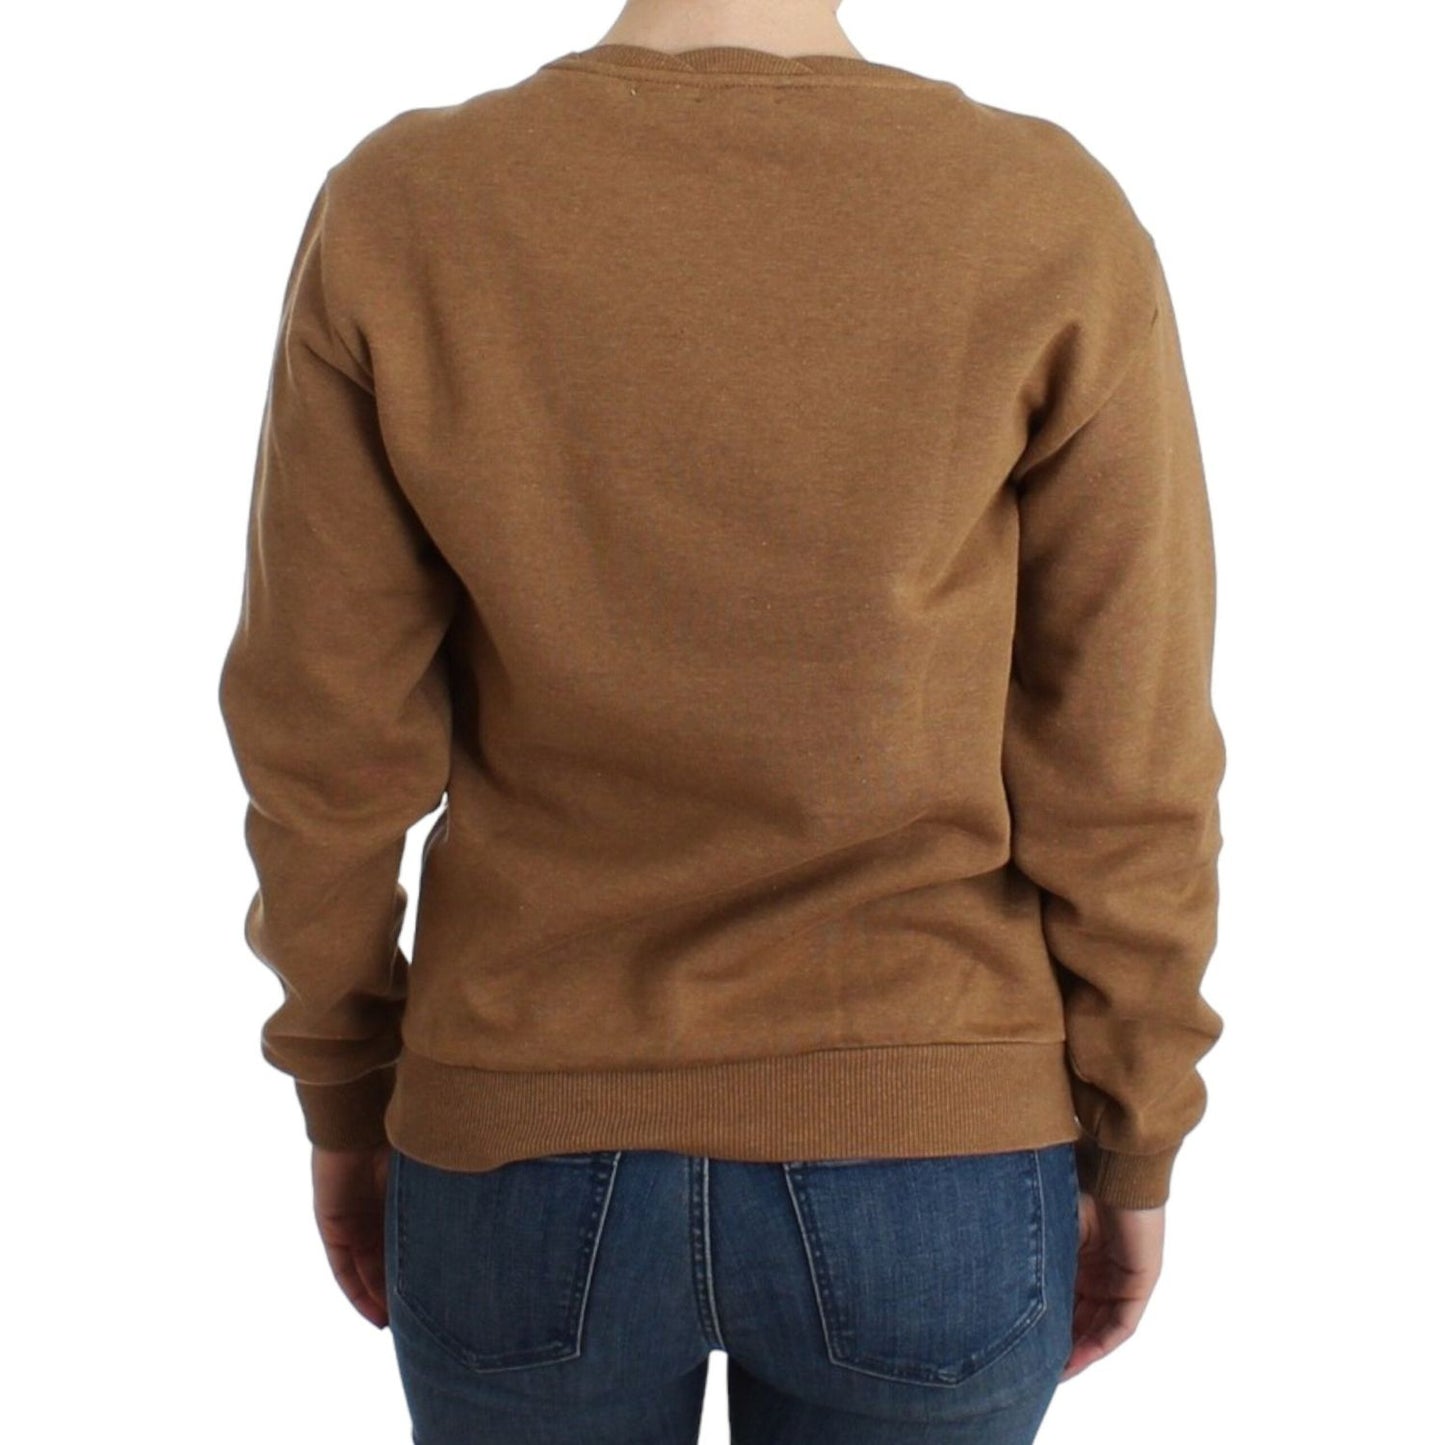 John Galliano Chic Brown Crewneck Cotton Sweater brown-crewneck-cotton-sweater 5844-brown-crewneck-cotton-sweater-2-scaled-fc97bc52-fa3.jpg